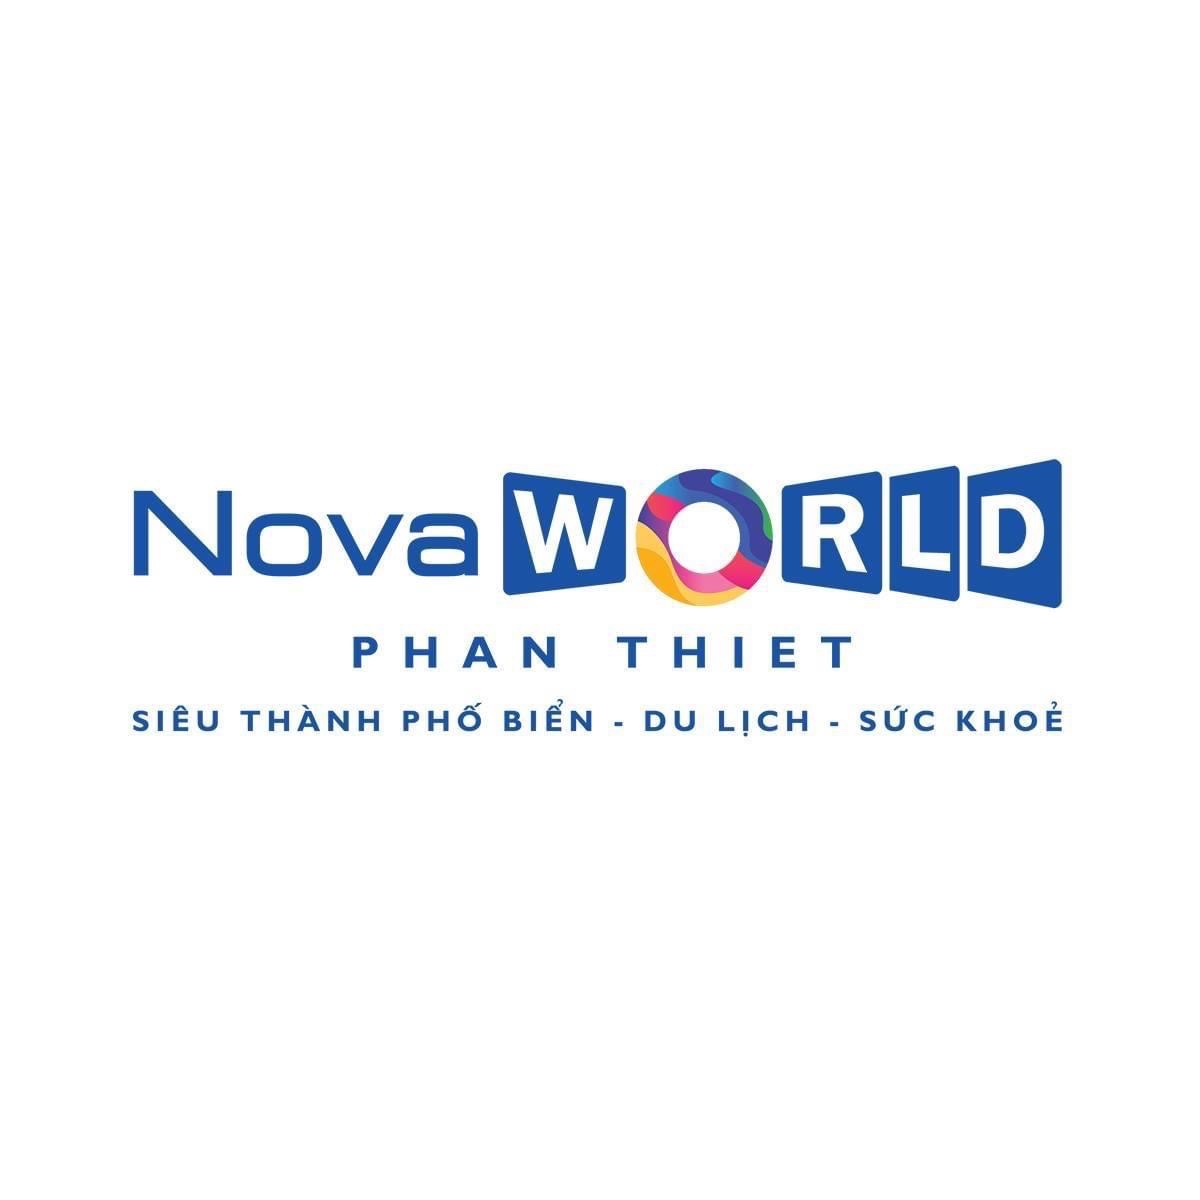 Novaworld   Phan Thiết (novaworldphanthietland)